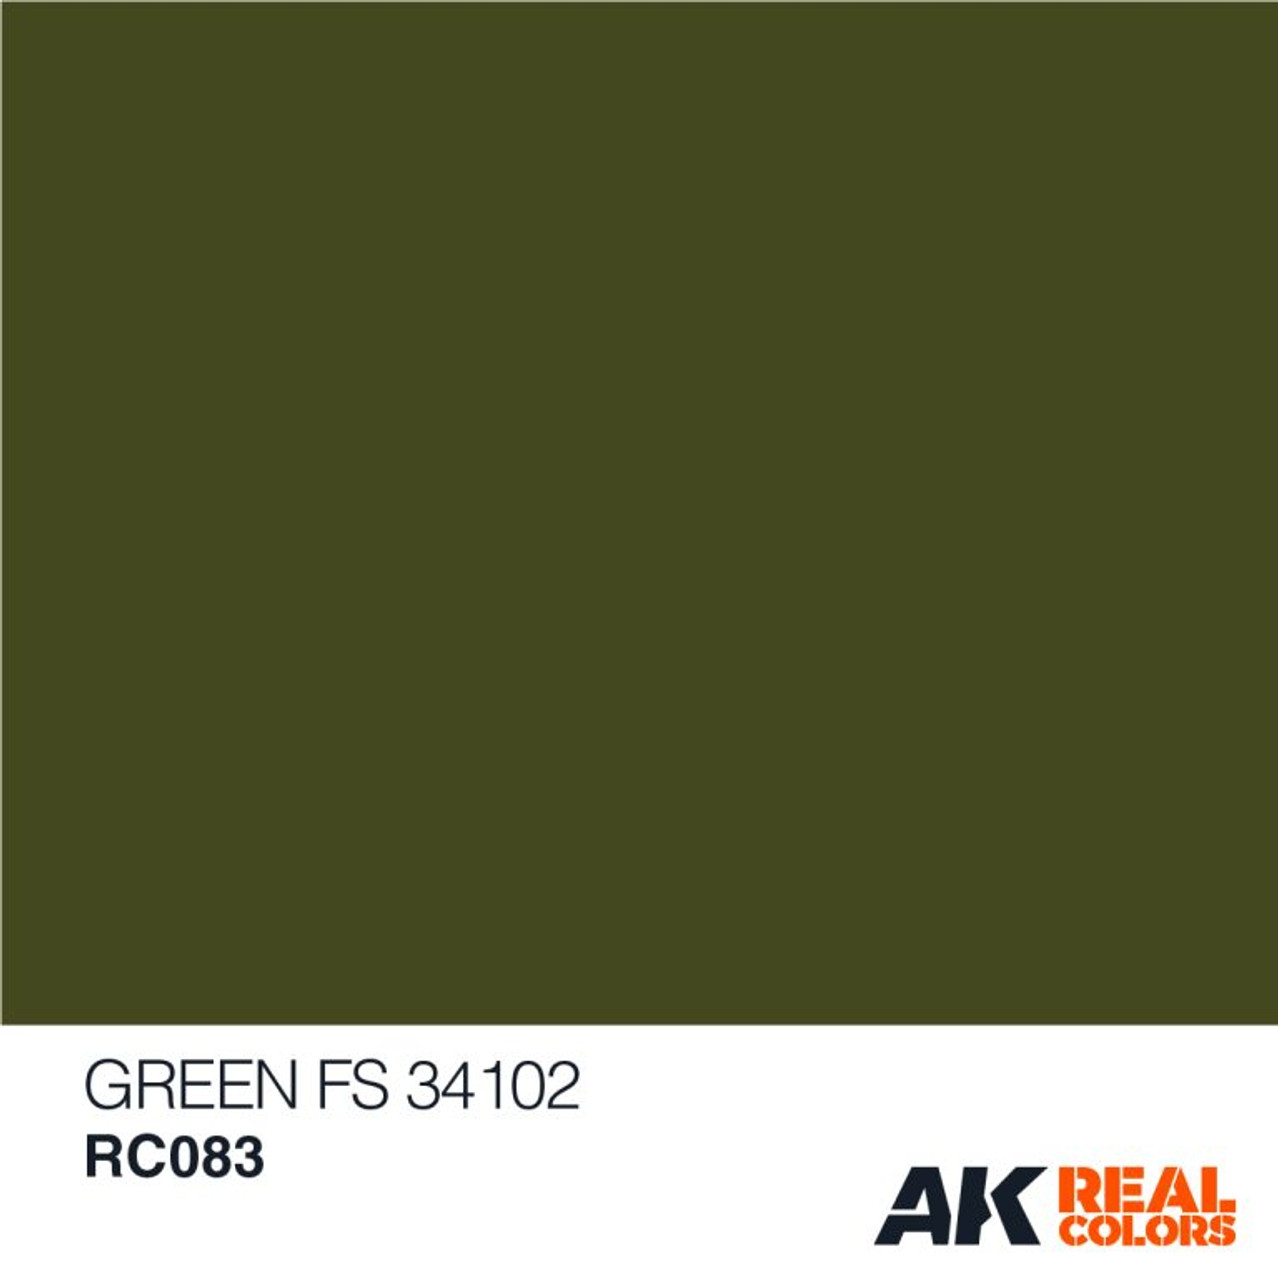 RC083 - Green FS 34102 10ml